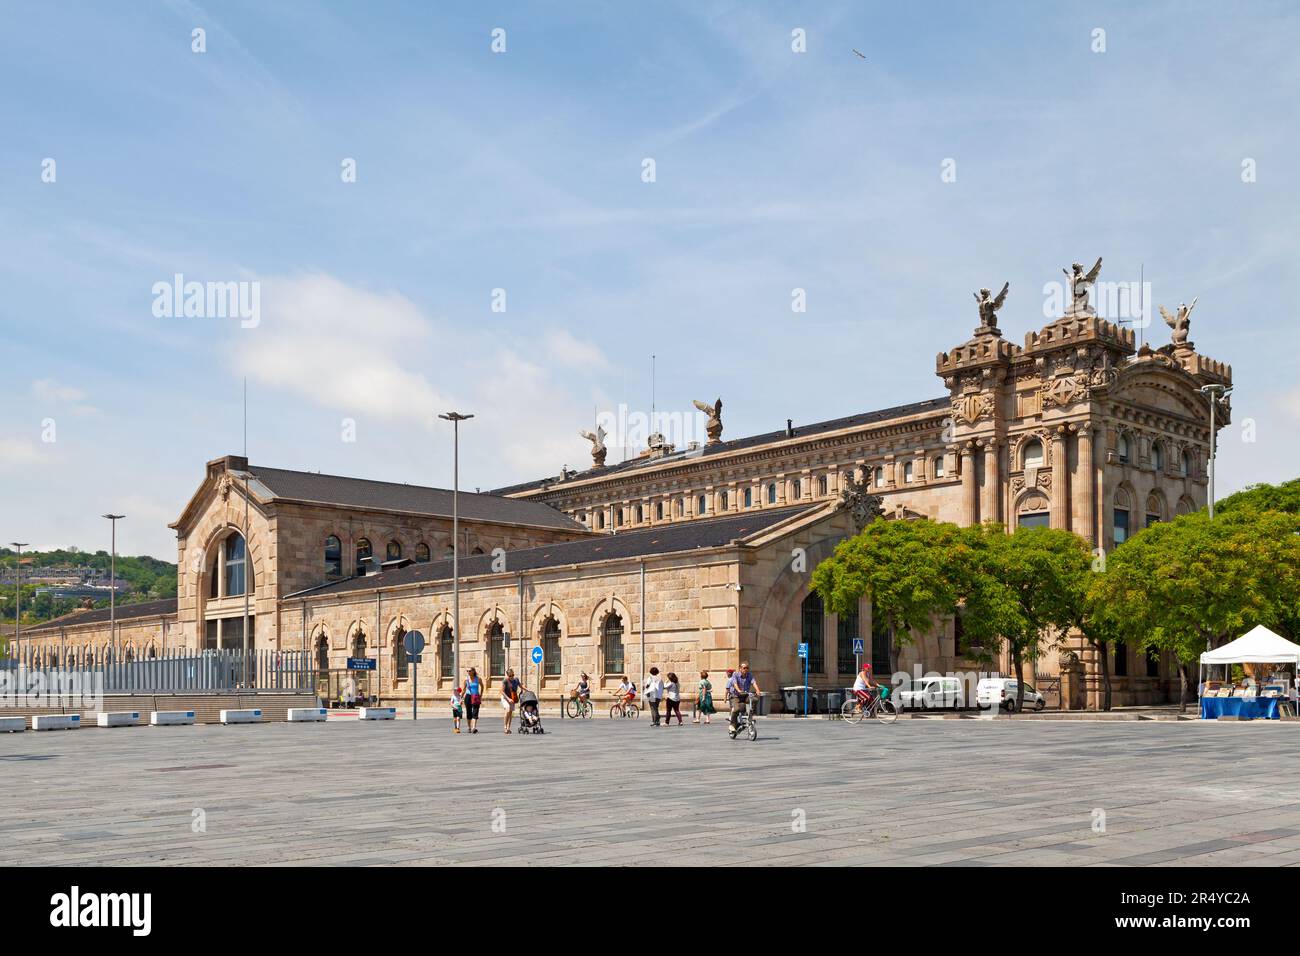 Barcelona, Spanien - Juni 08 2018: Die Staatliche Steuerbehörde (Katalanisch: Agència Estatal d'Administració Tributària) wenige Meter vom mir entfernt Stockfoto